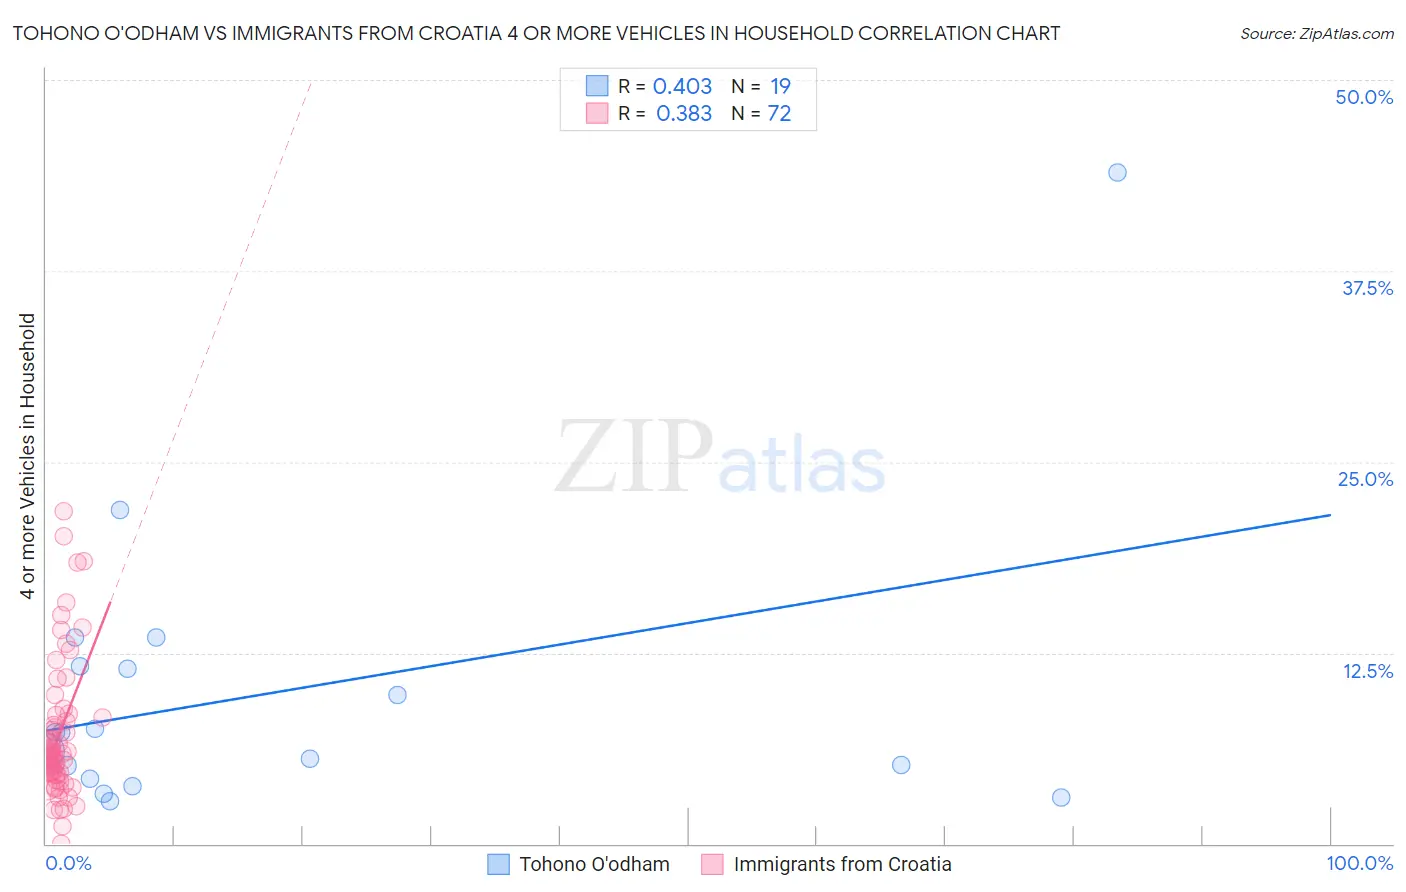 Tohono O'odham vs Immigrants from Croatia 4 or more Vehicles in Household